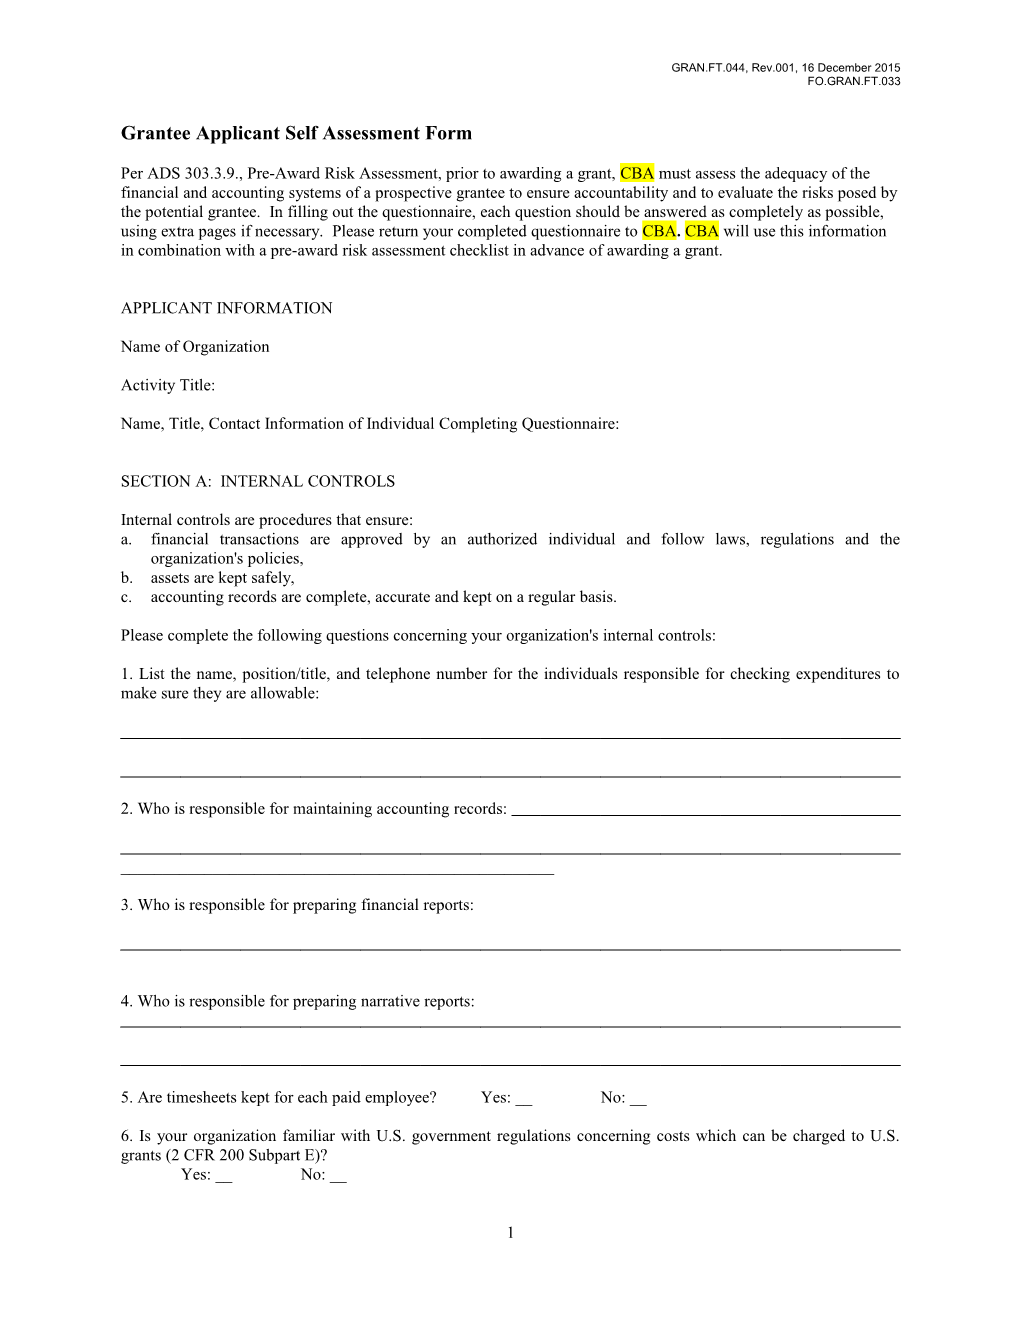 Grantee Applicant Self Assessment Form